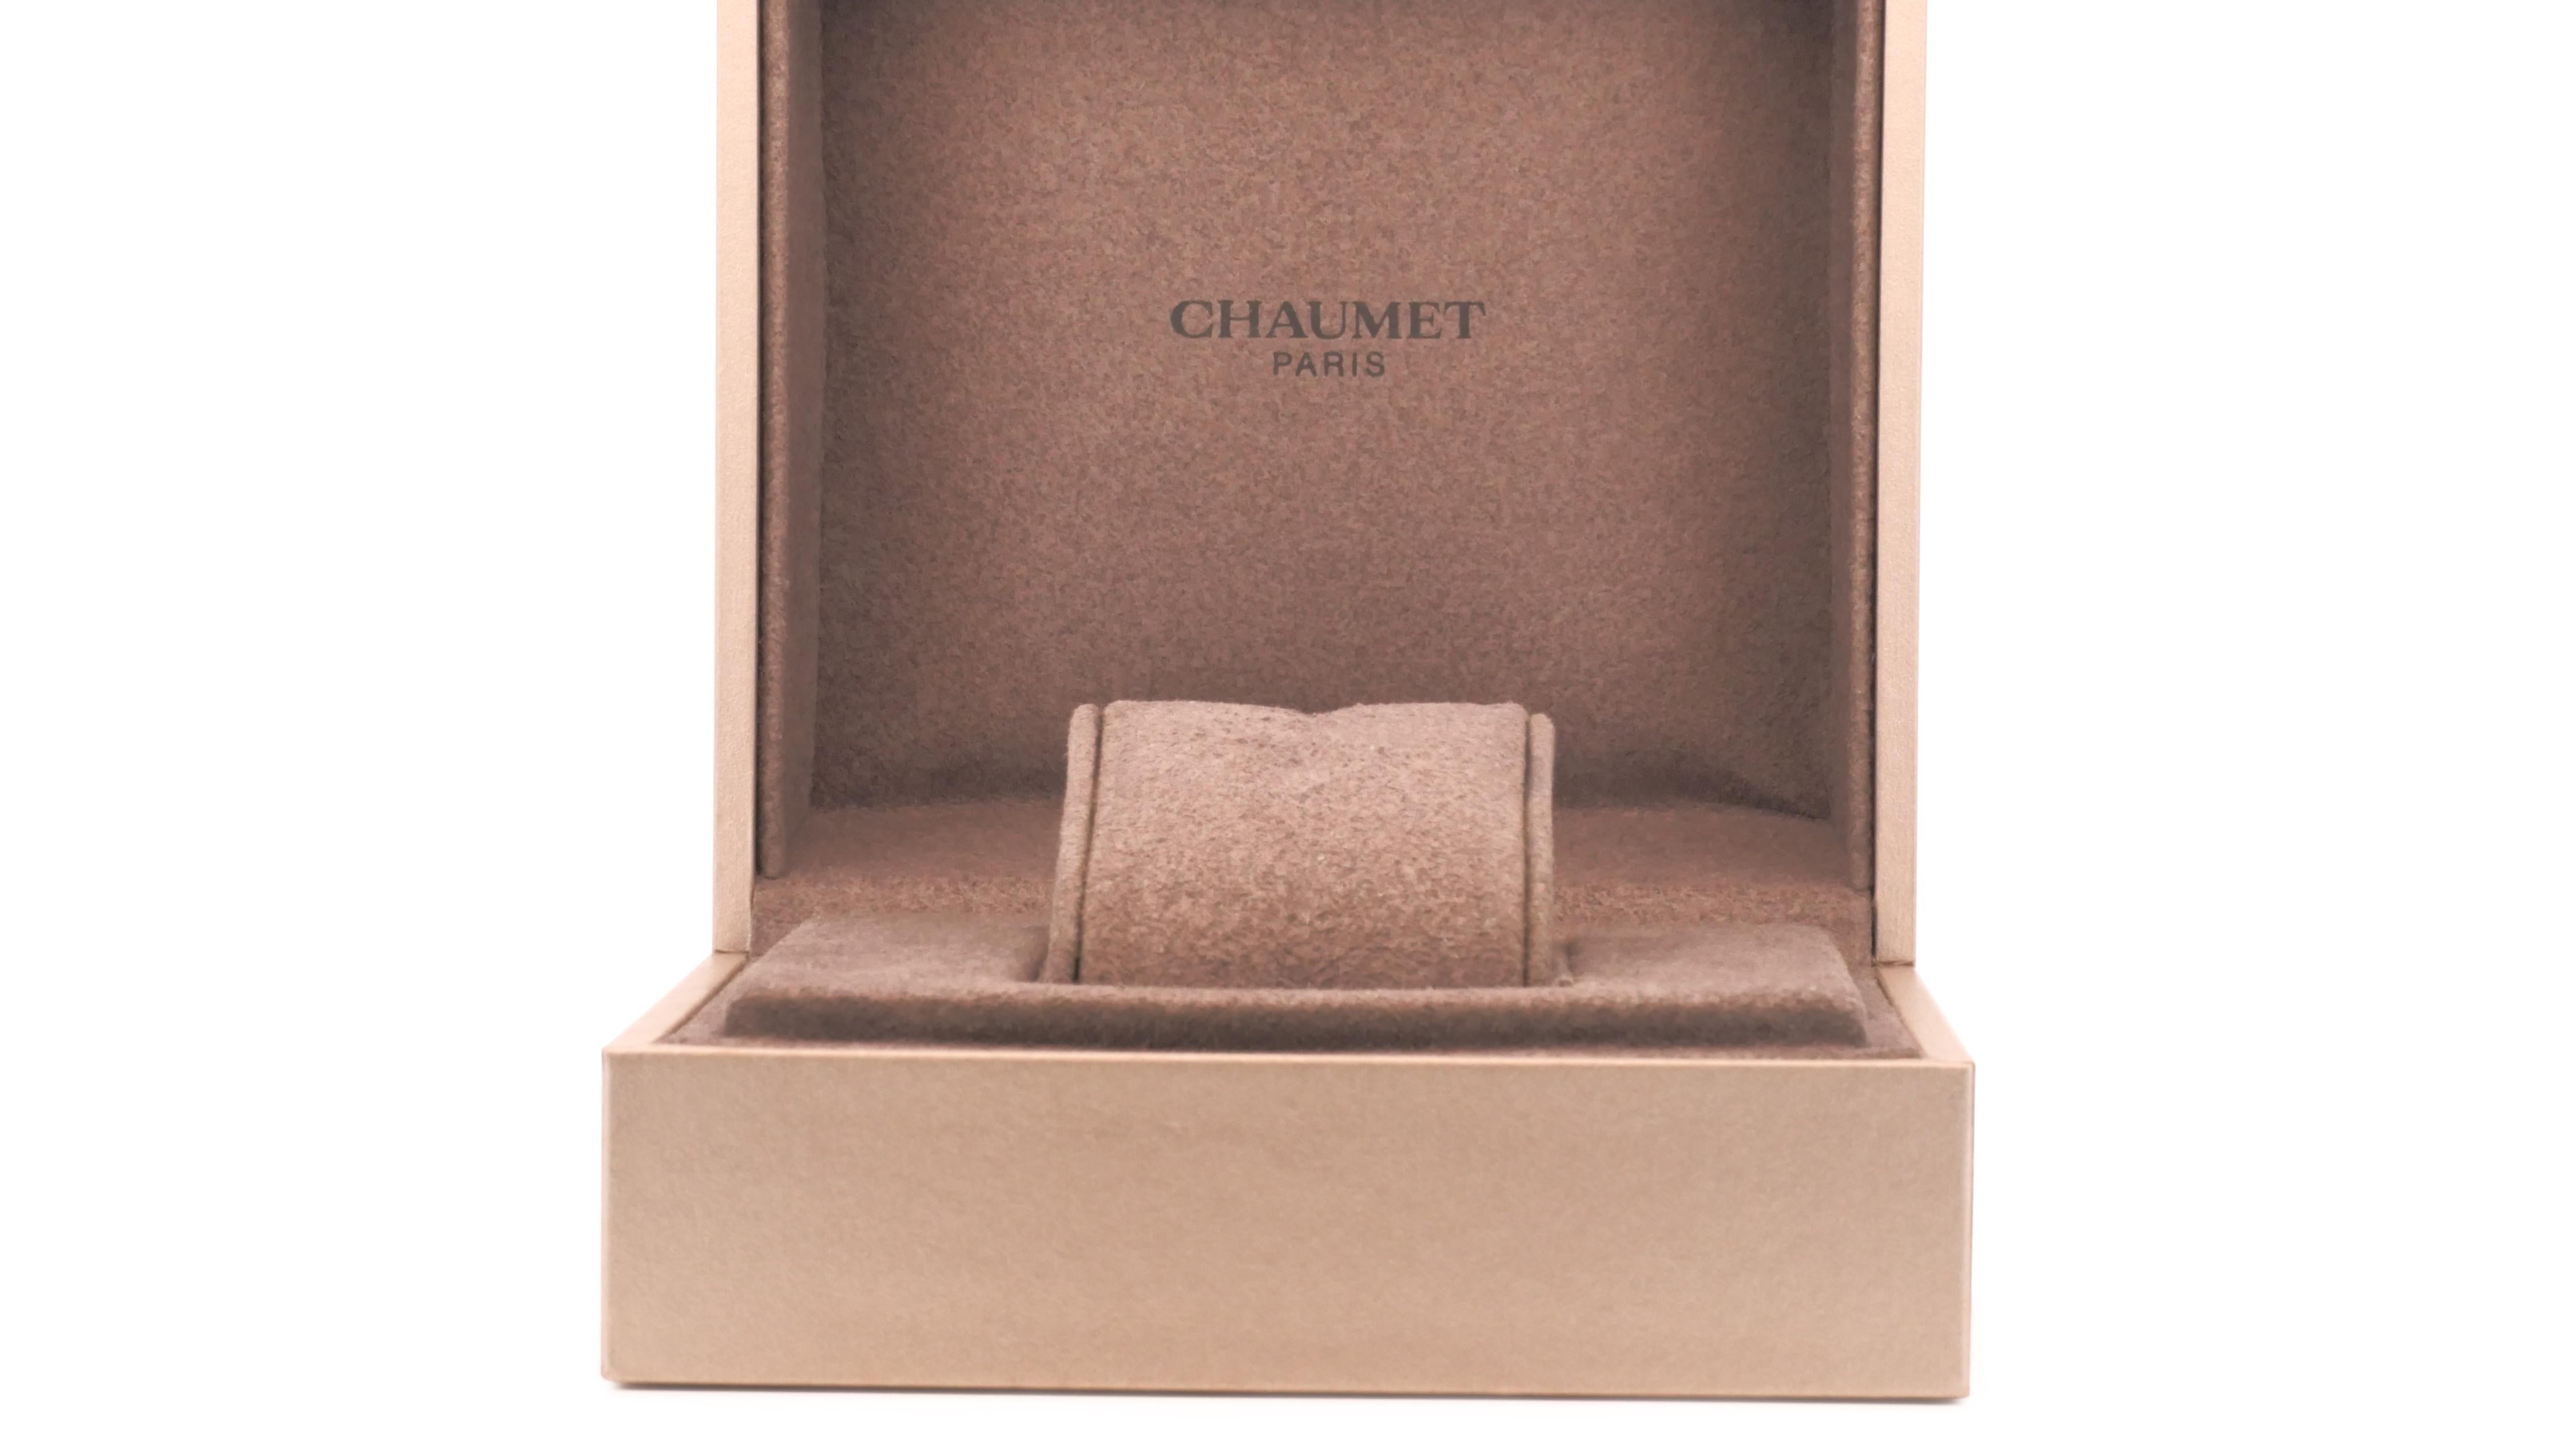 Gorgeous 18k White Gold Bangle with 0.84 Ct Natural Diamonds Chaumet Paris 2